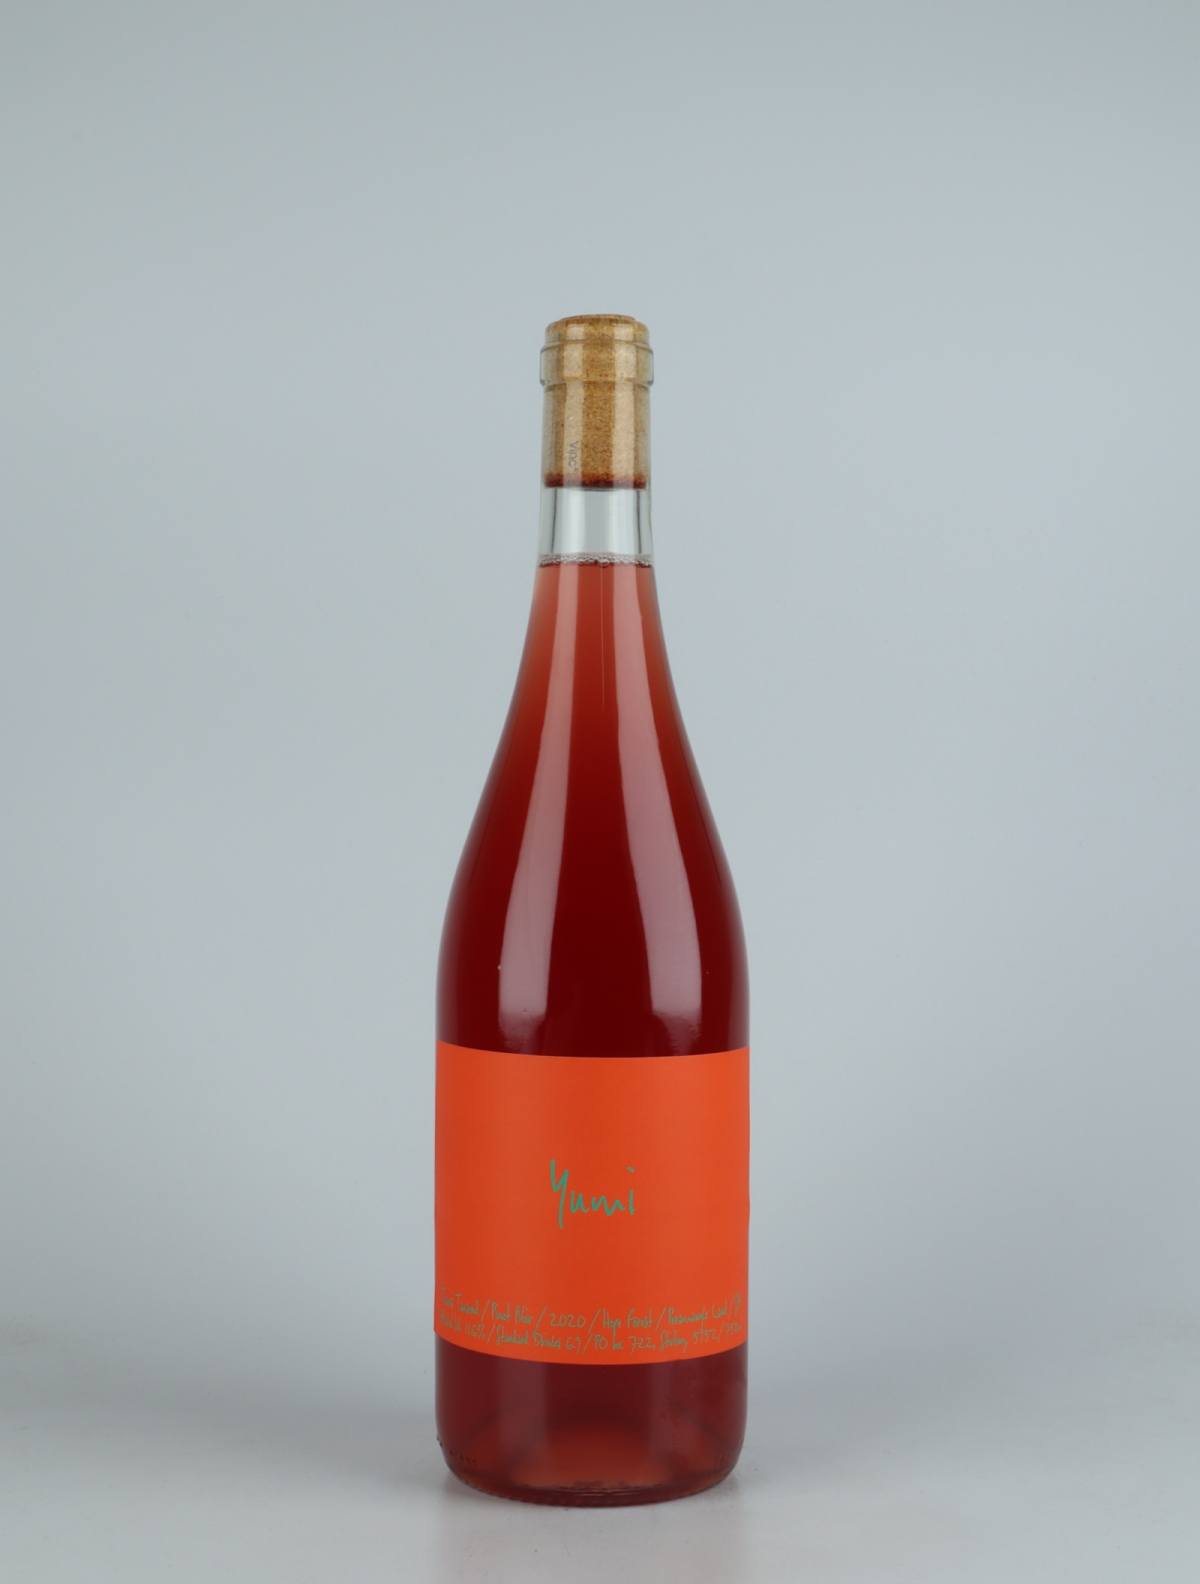 En flaske 2020 Yumi Pinot Noir Rødvin fra Travis Tausend, Adelaide Hills i Australien